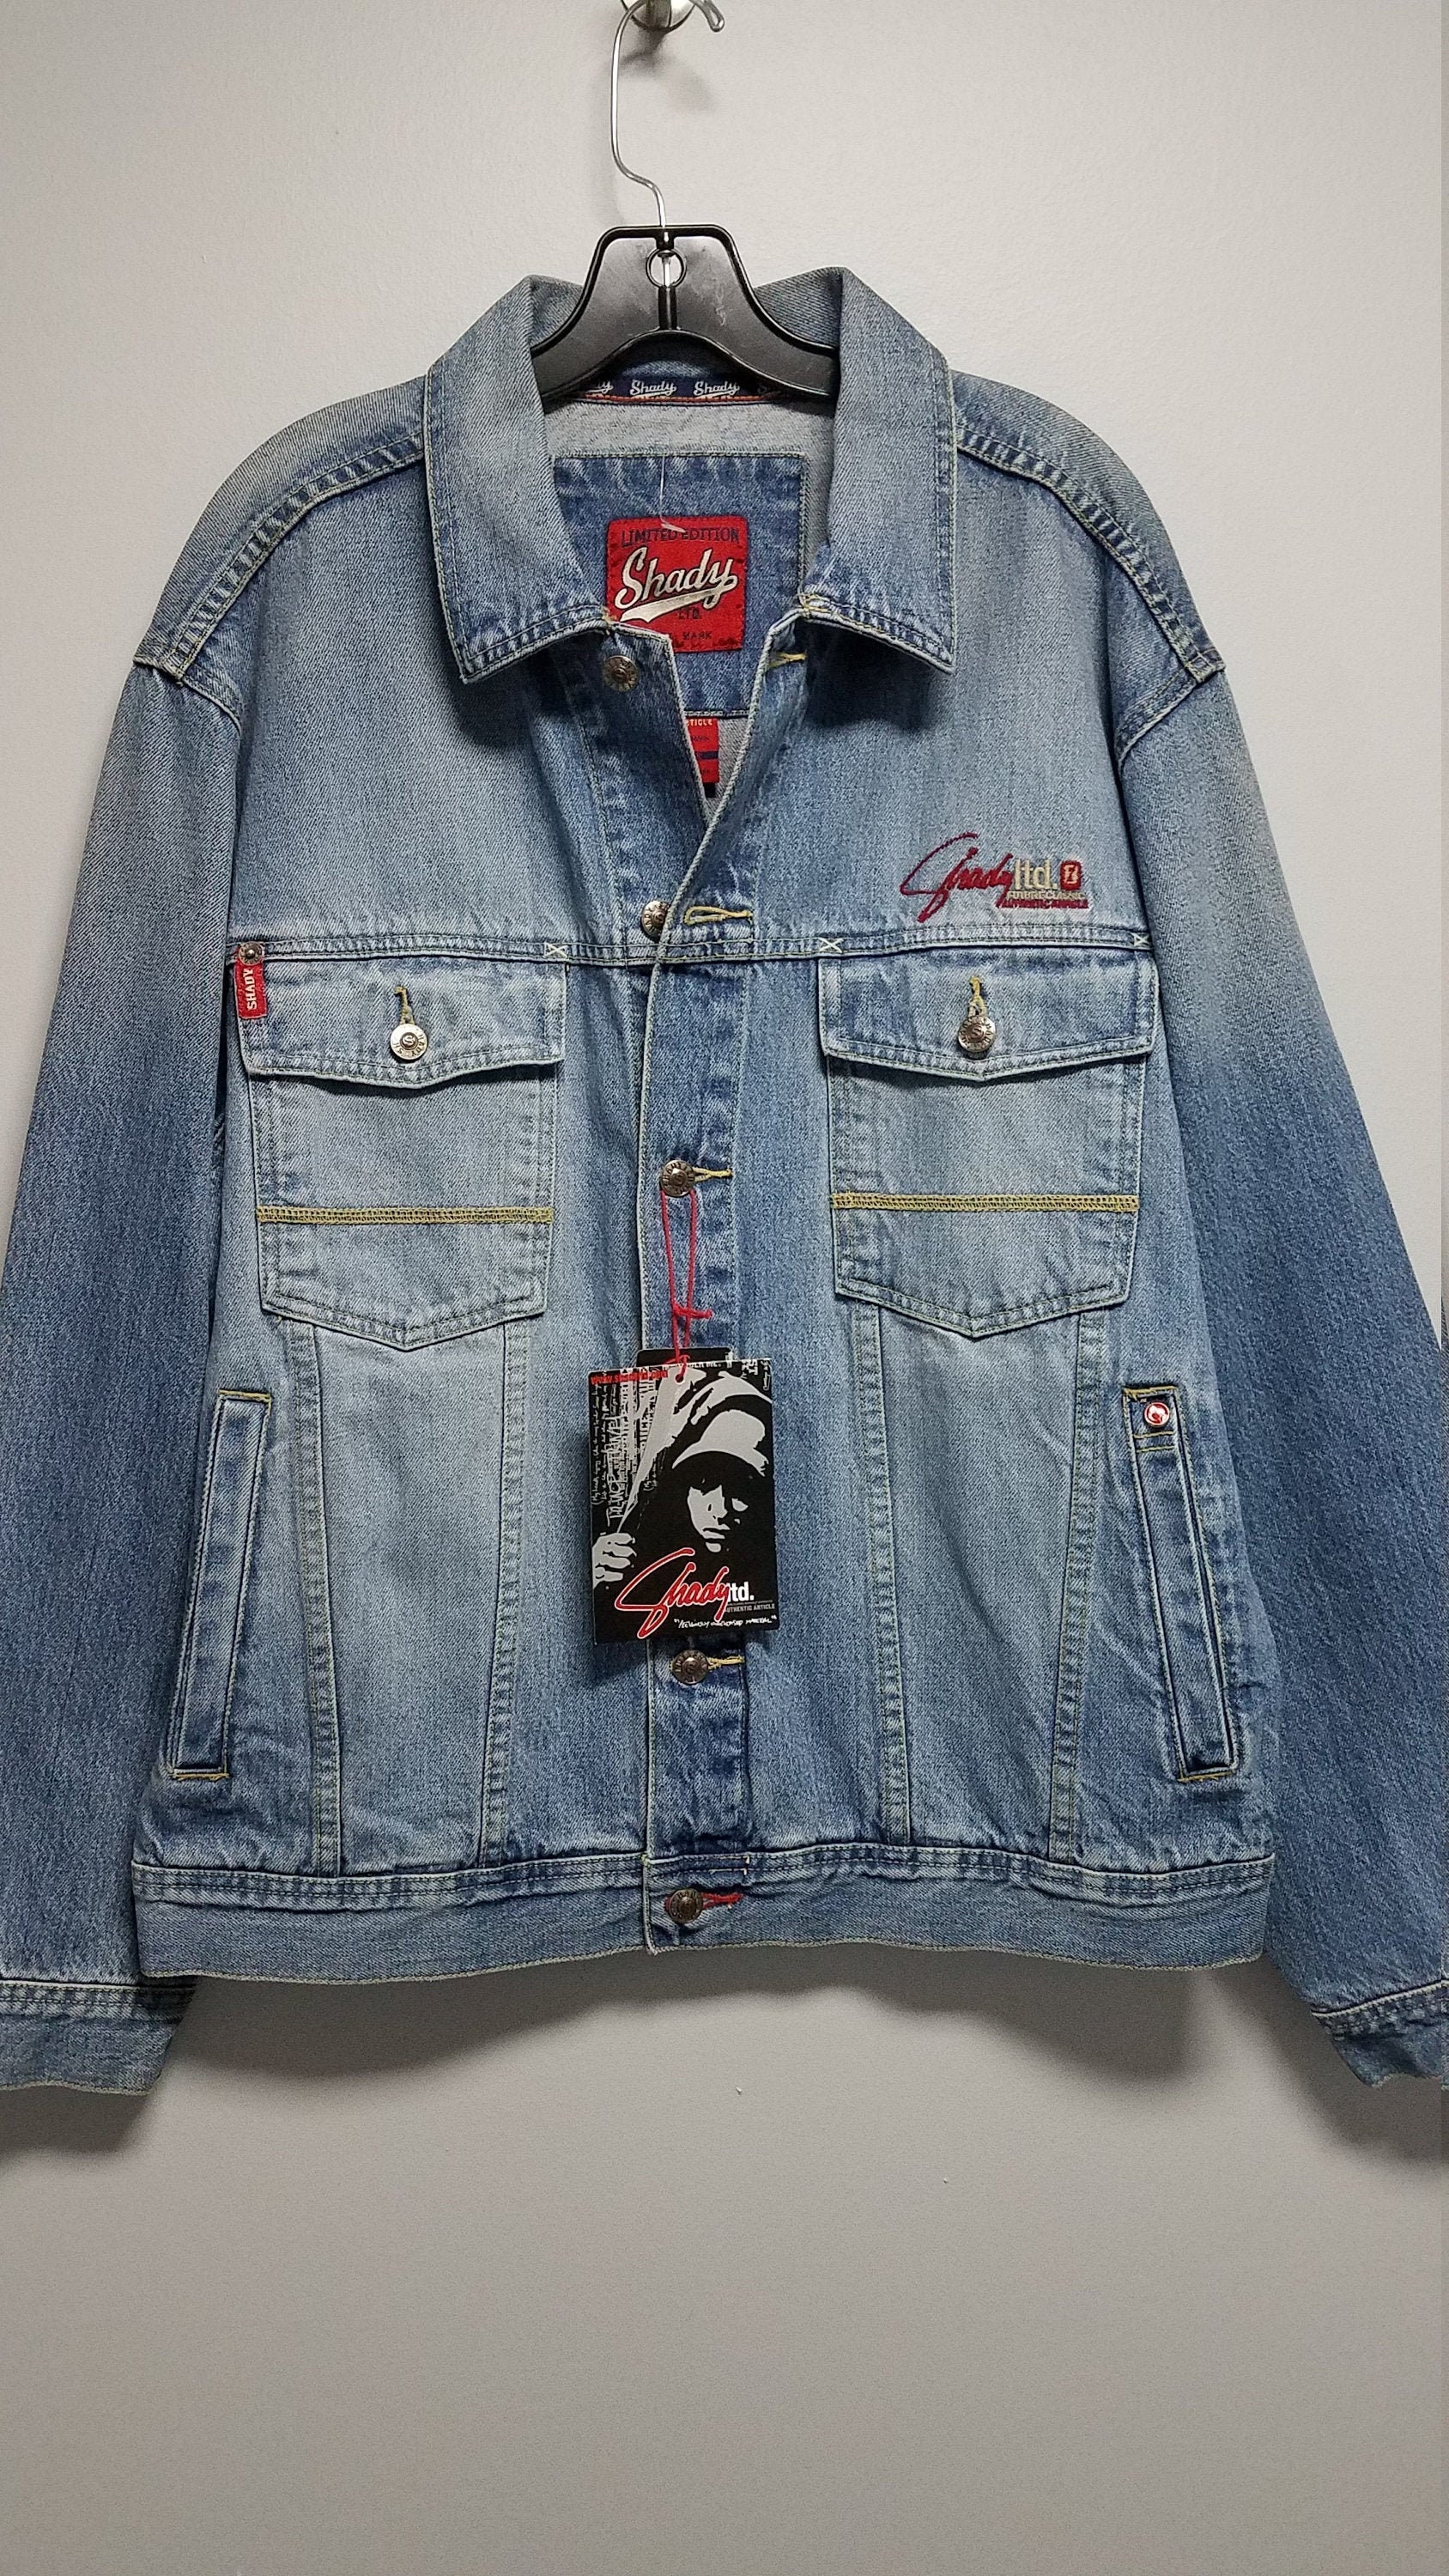 Rare Super AWSOME Vintage Jean Jacket by SHADY LTD.   Etsy 日本